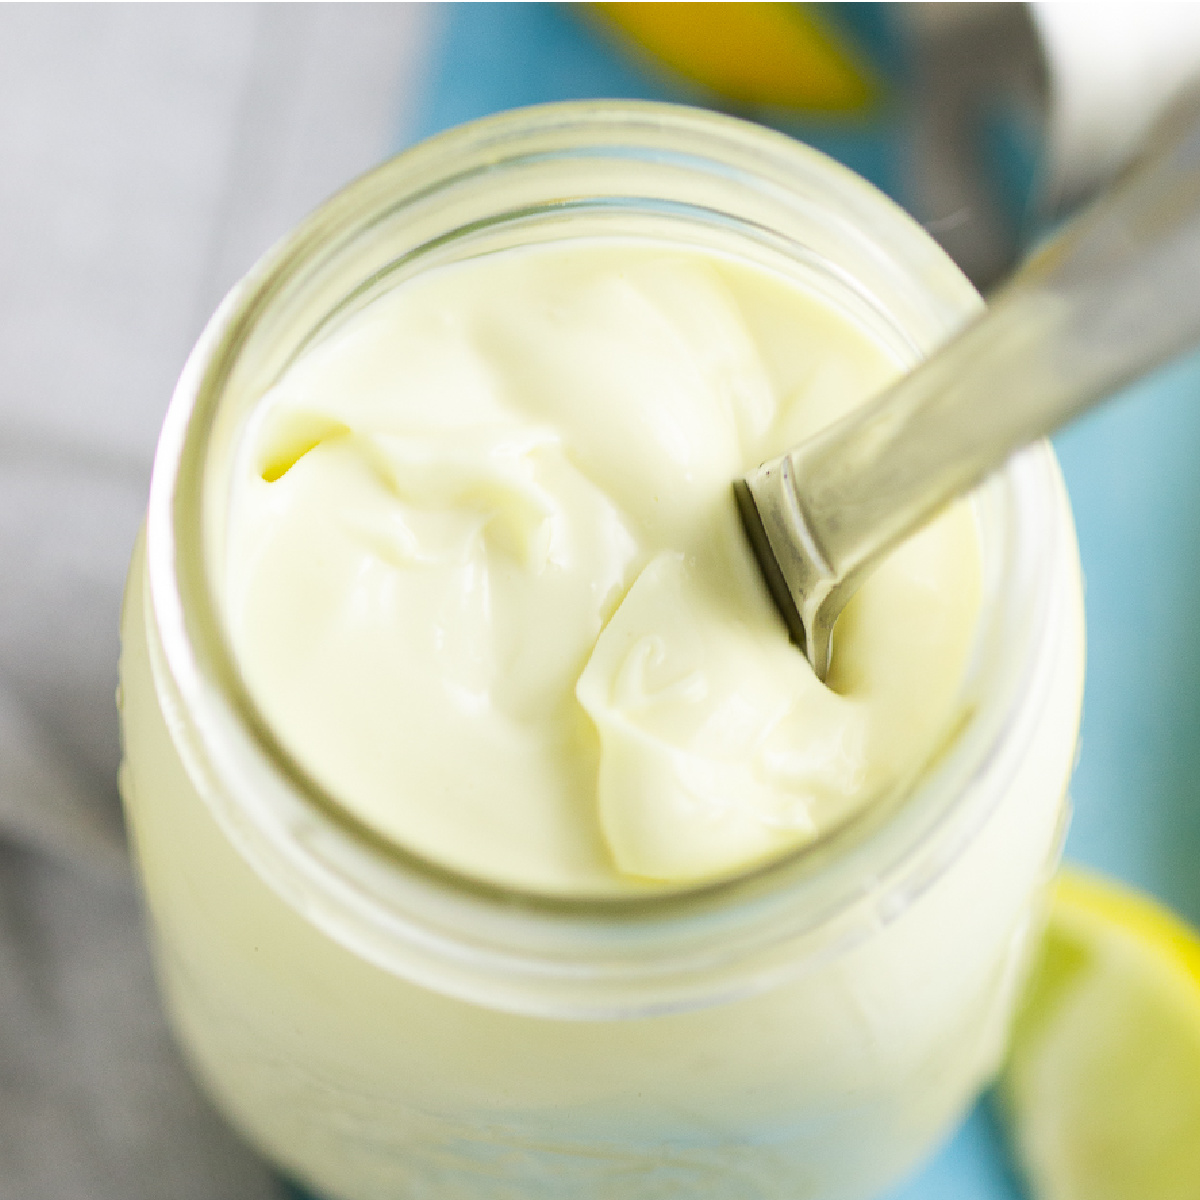 mayonnaise recipe